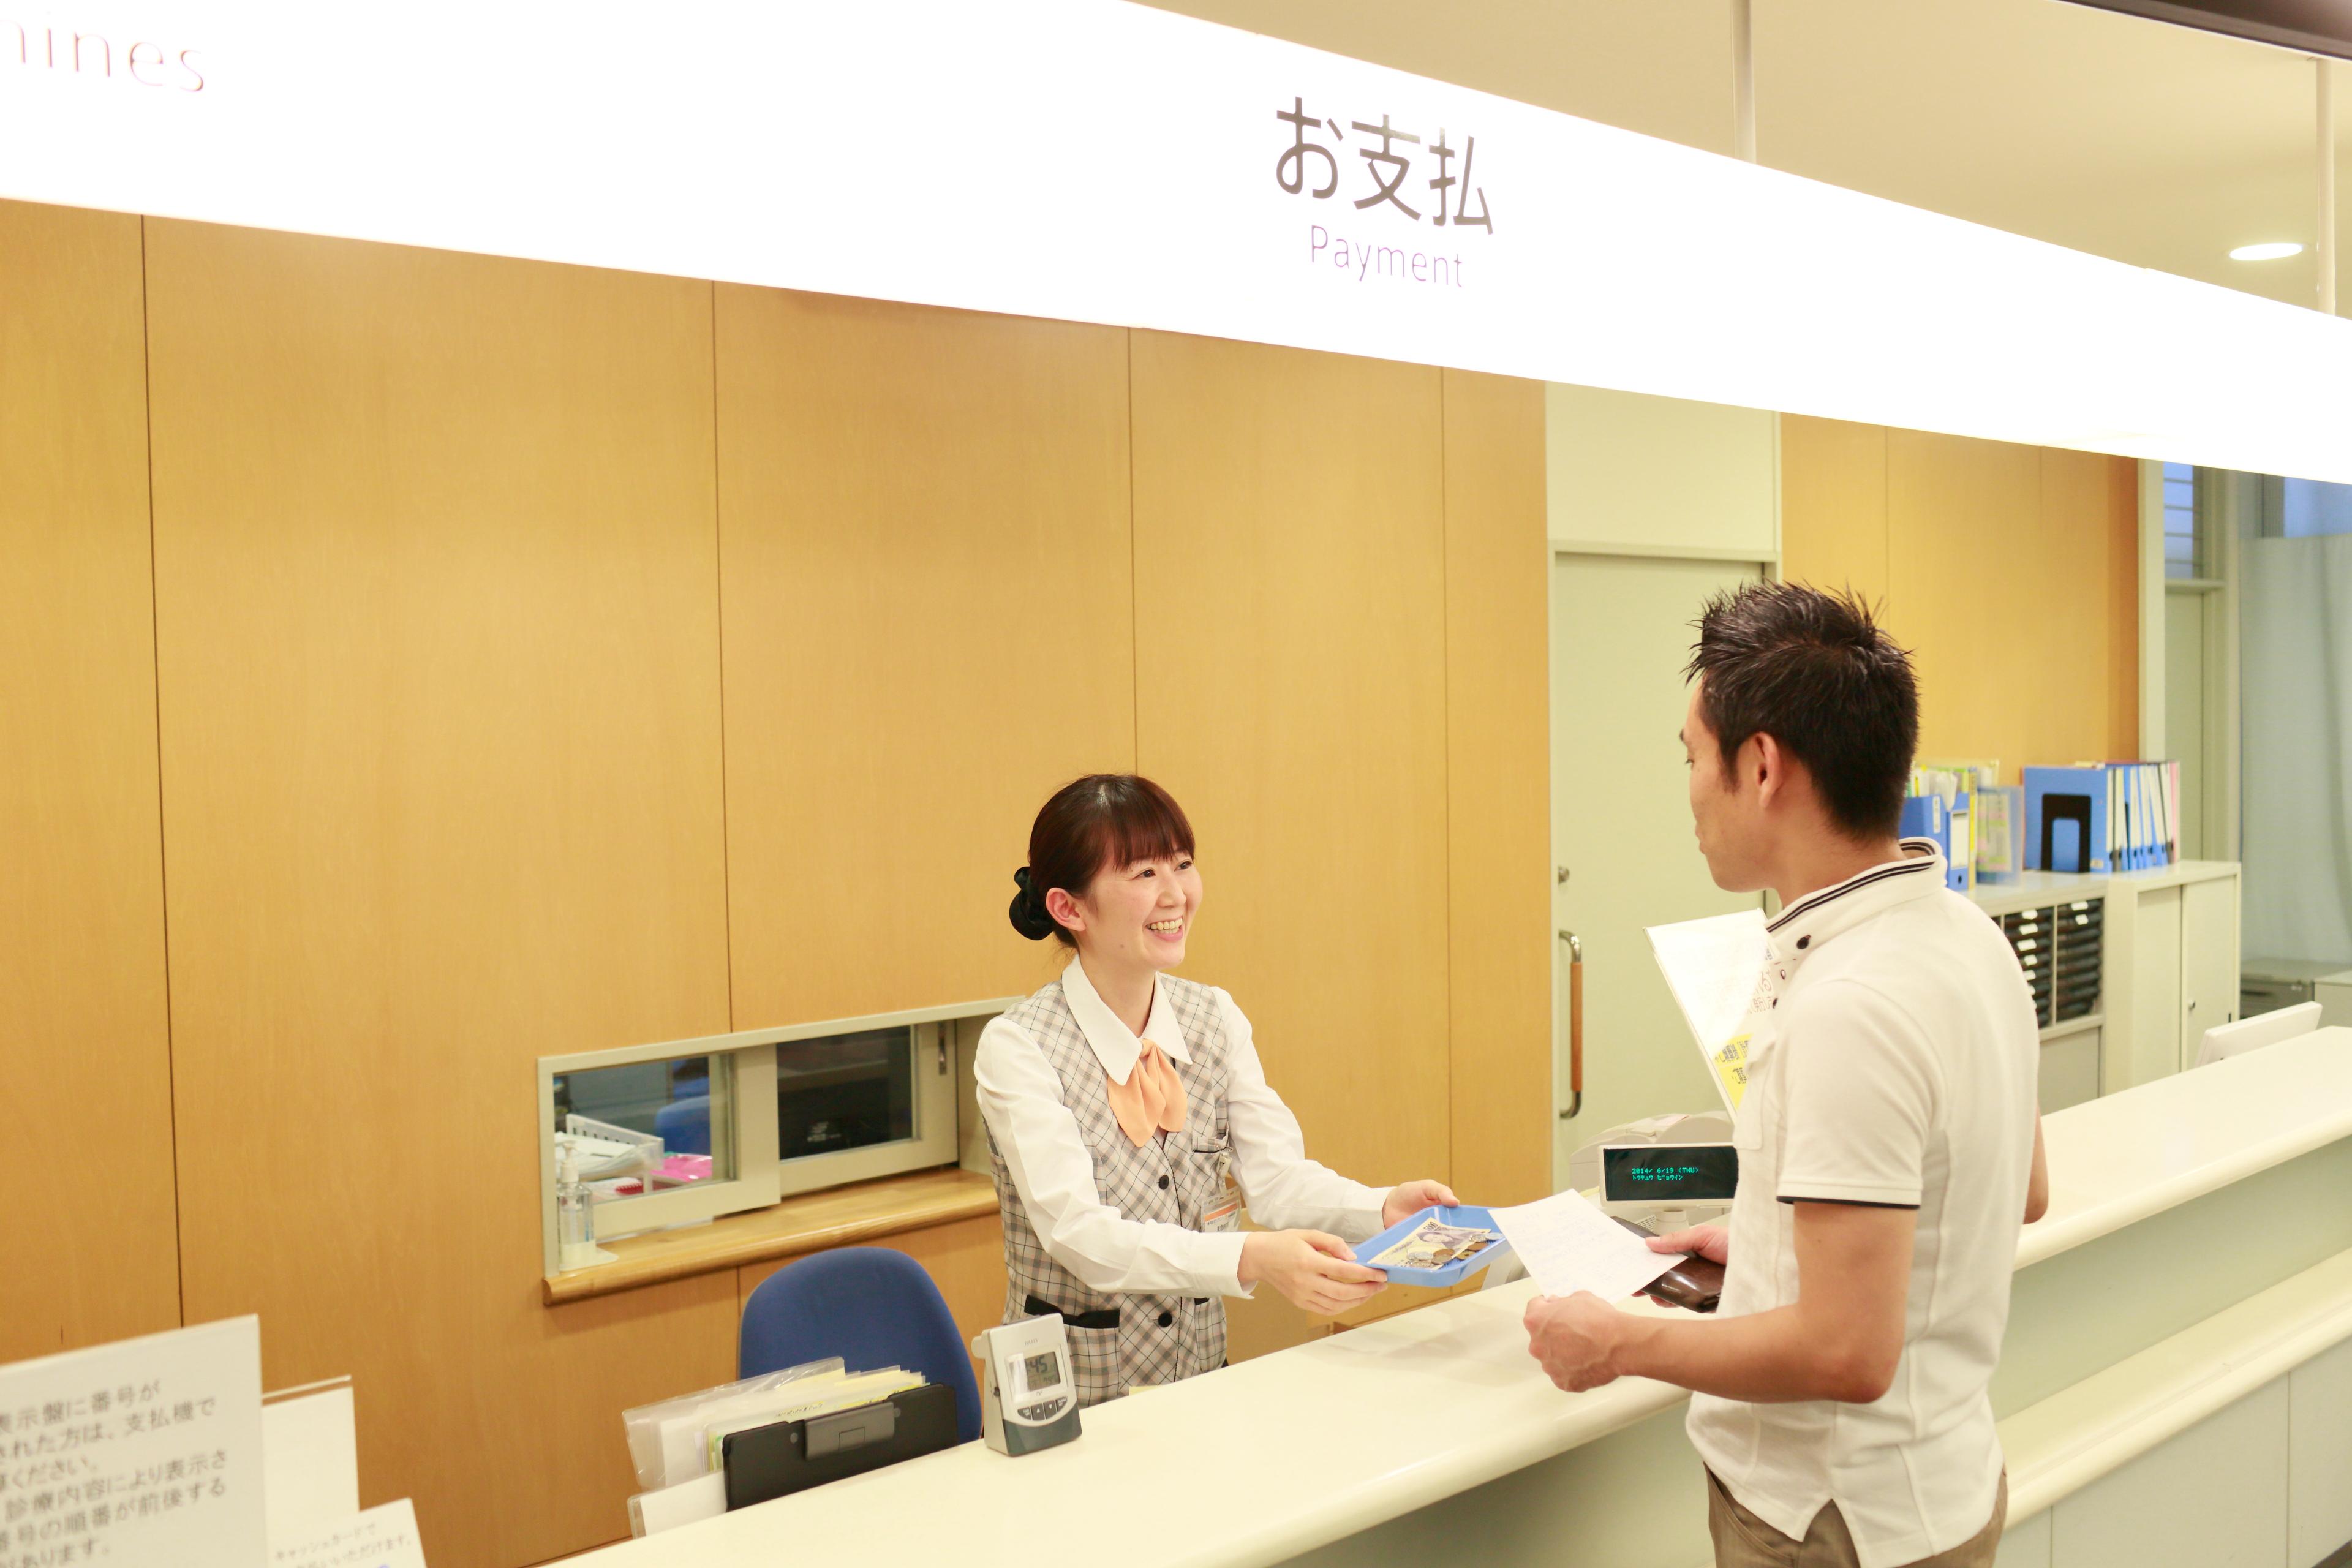 札幌孝仁会記念病院で医療事務会計窓口の正社員の求人 